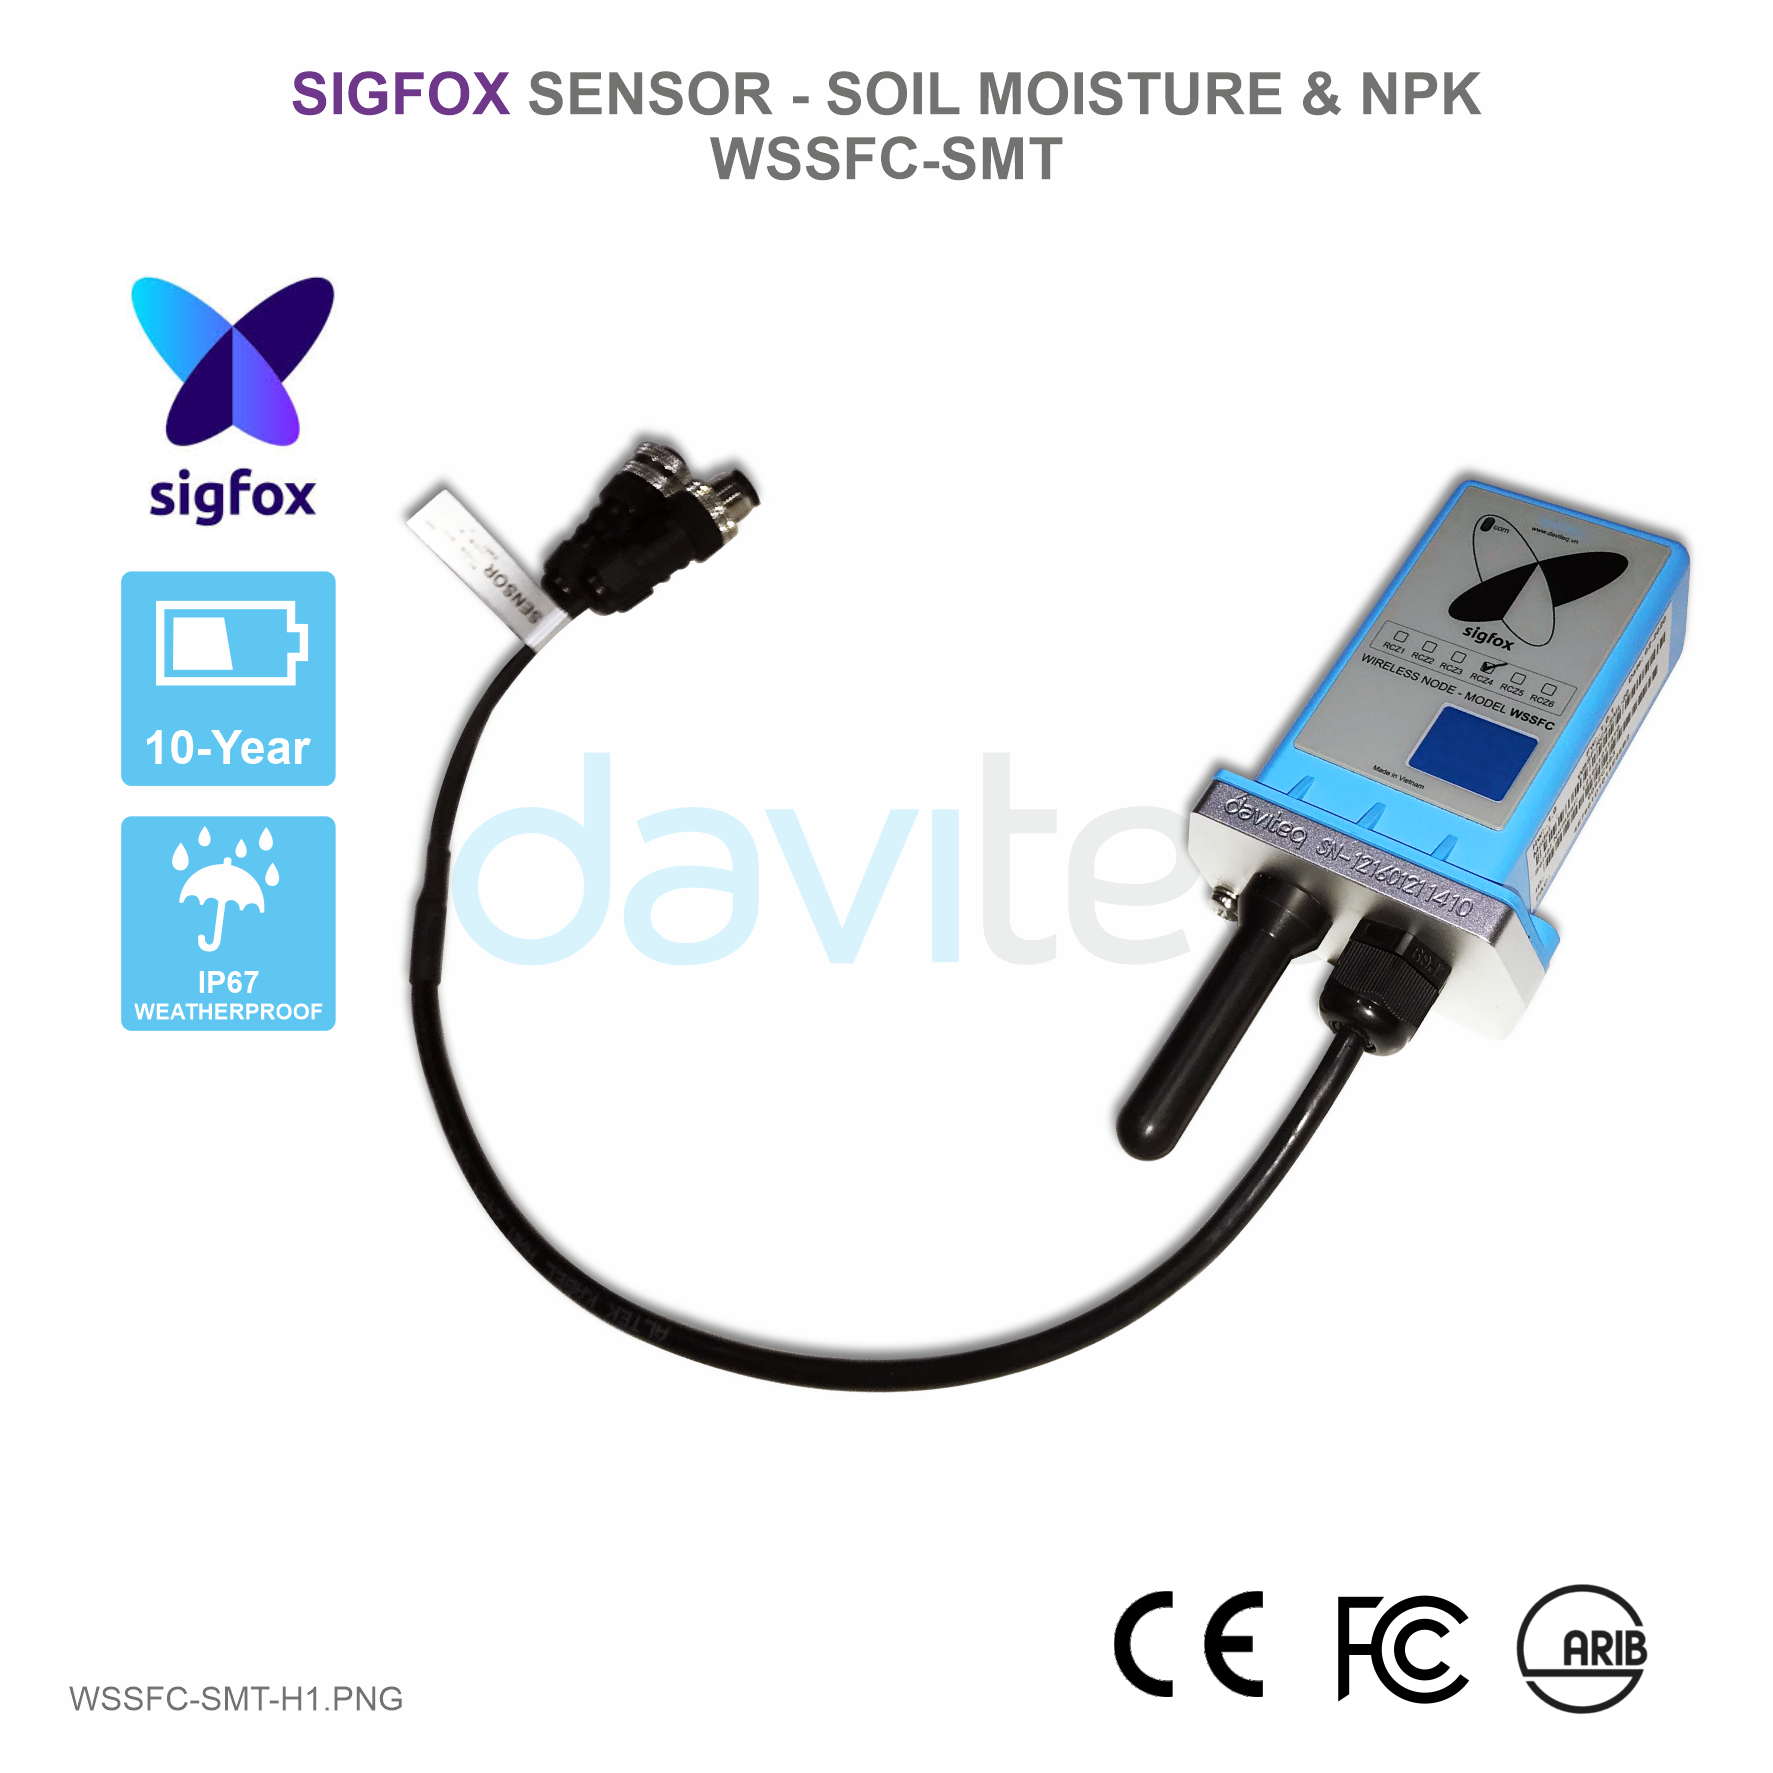 Sigfox Soil Moisture Sensor